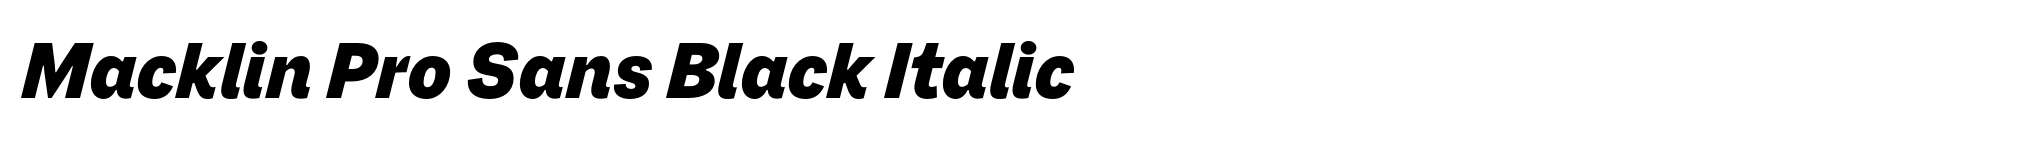 Macklin Pro Sans Black Italic image